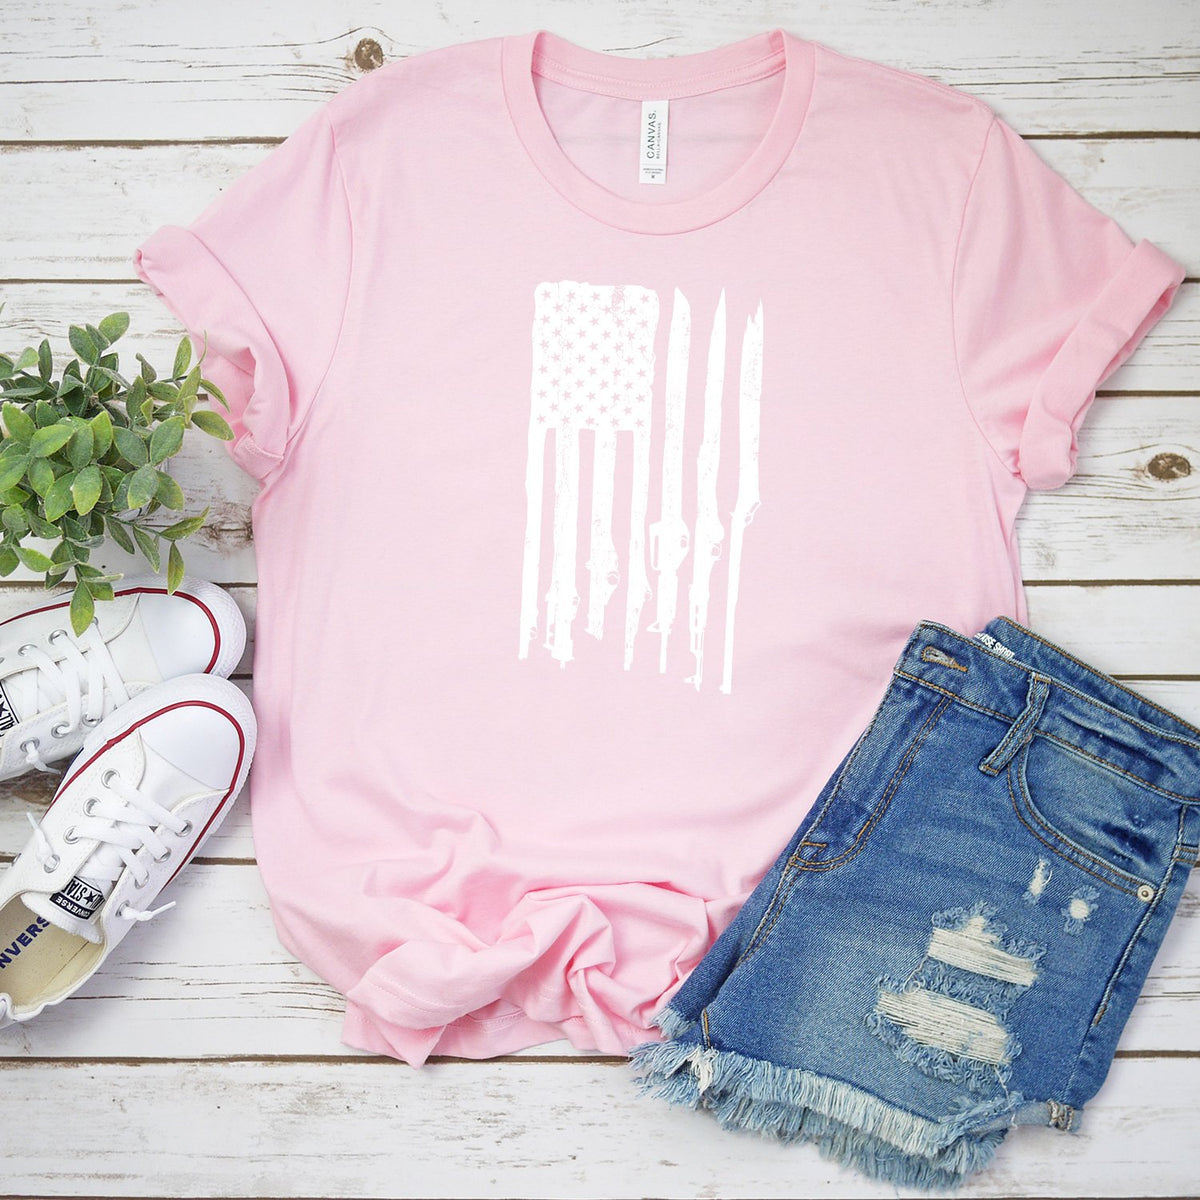 American Flag with Guns - Short Sleeve Tee Shirt